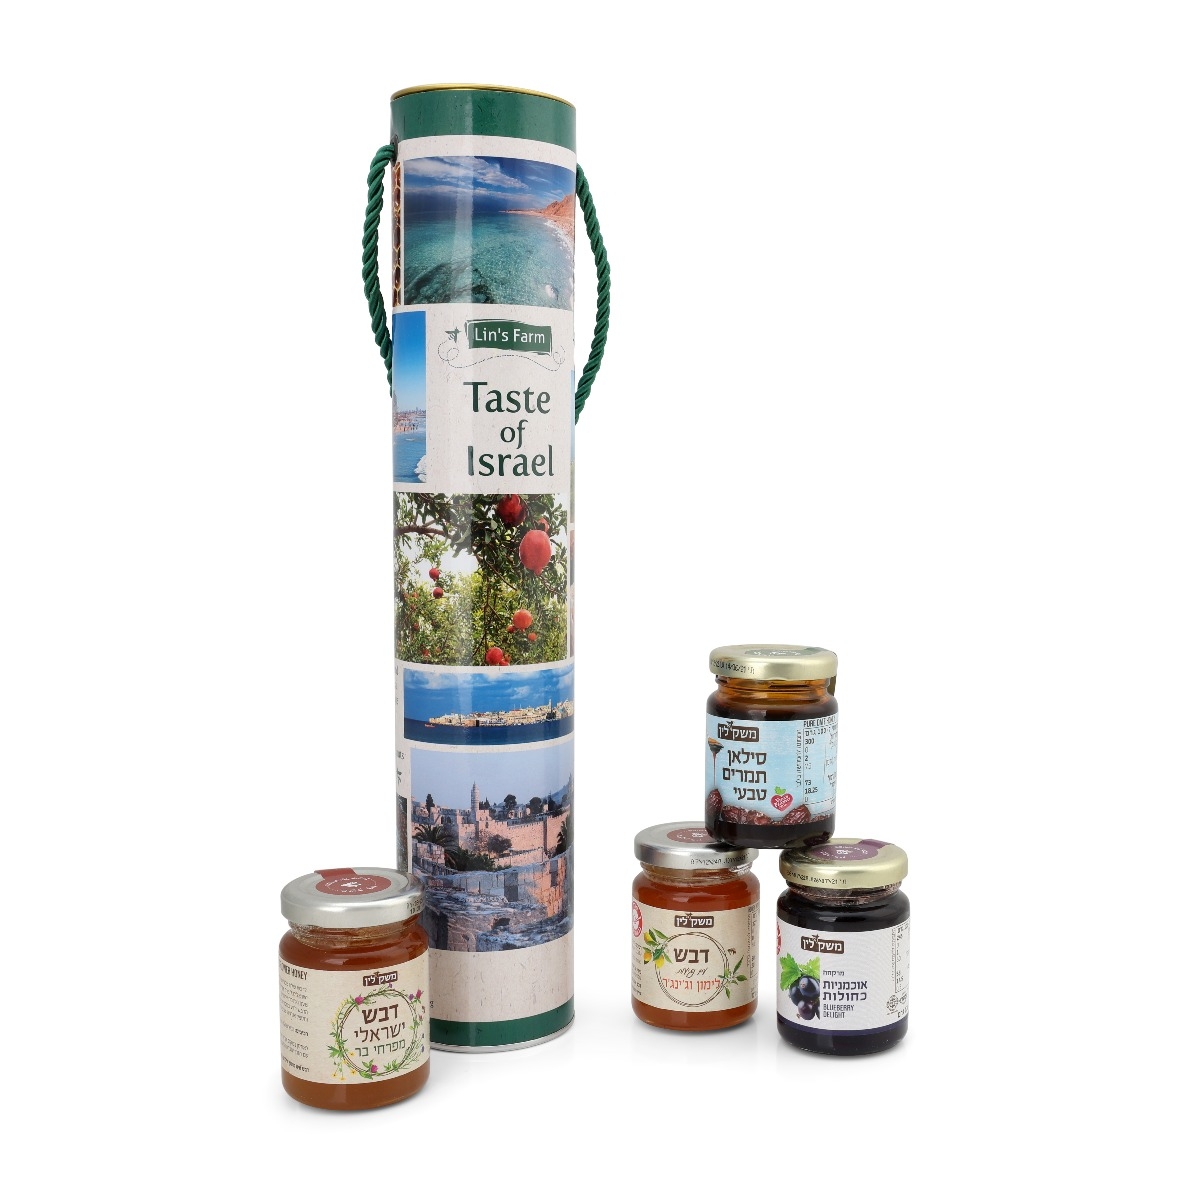 Lin's Farm All-Natural "Taste of Israel" Gift Box - 1